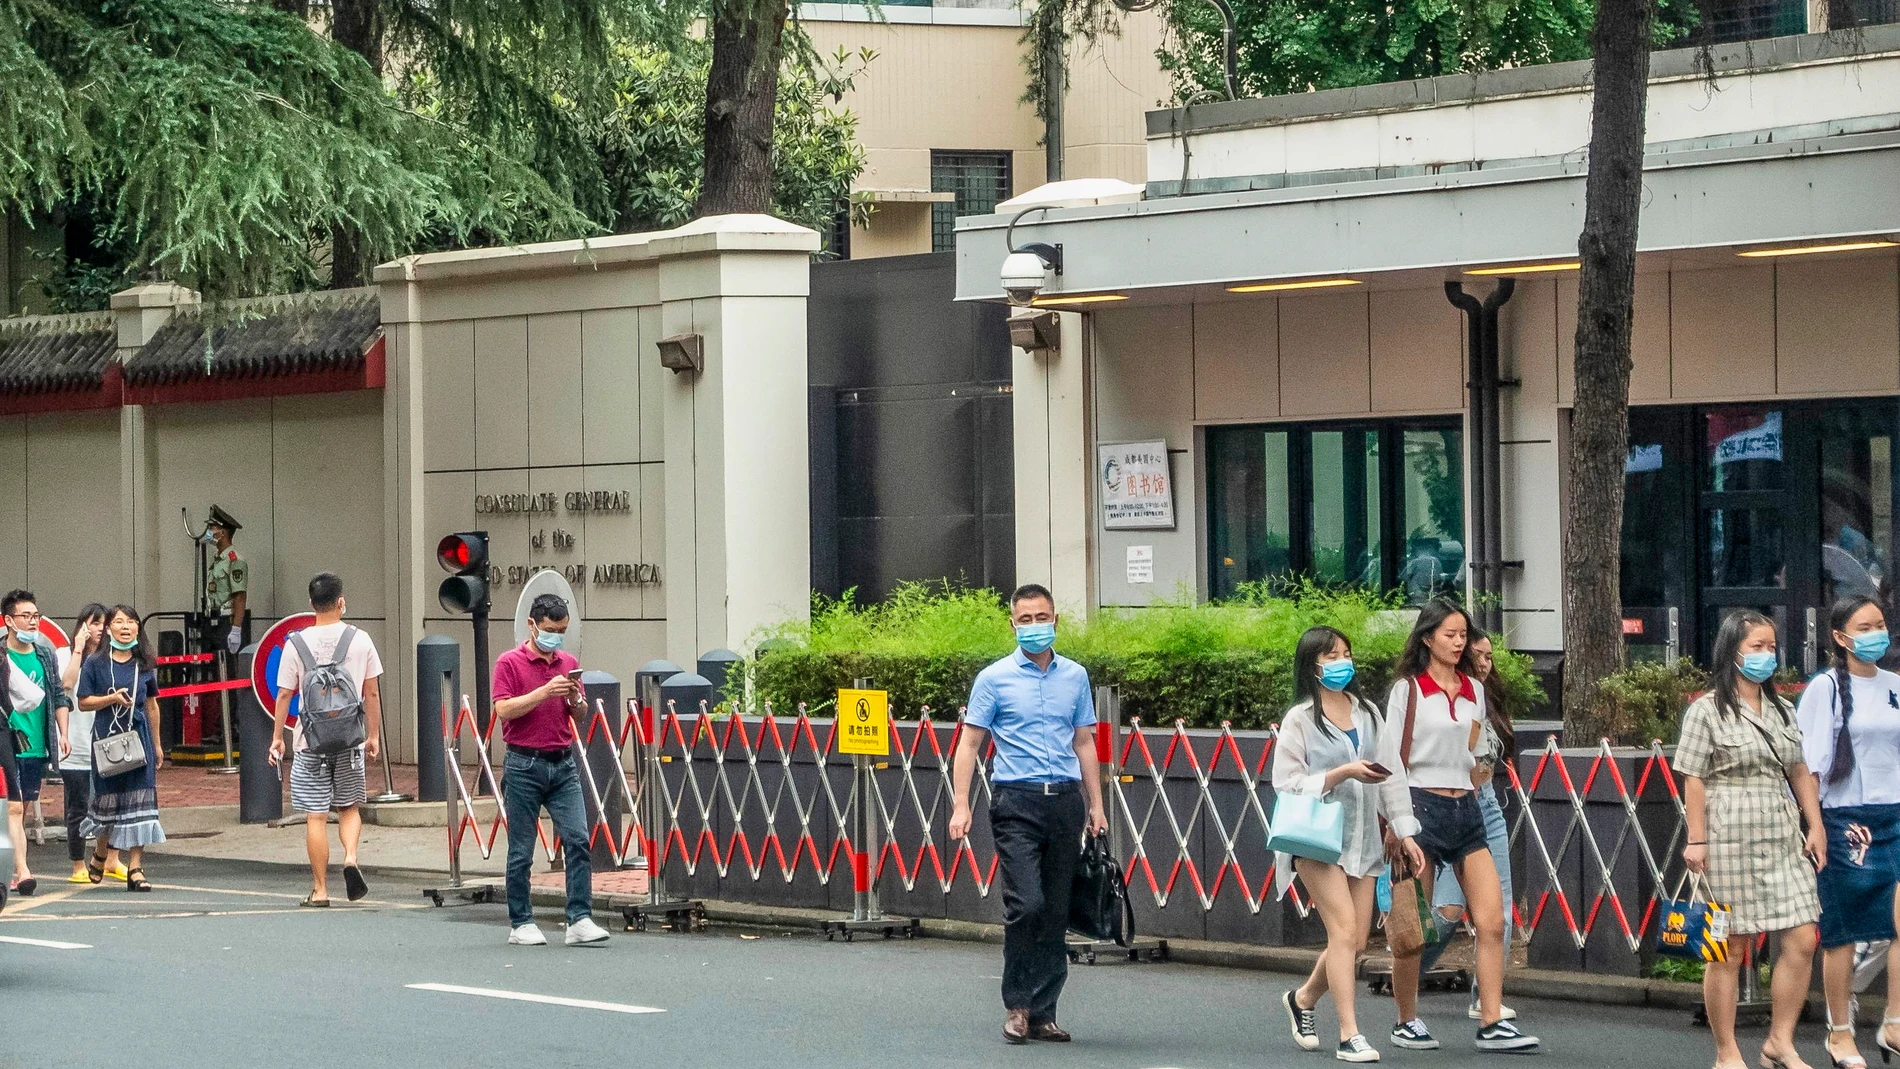 China orders closure of US consulate in Chengdu